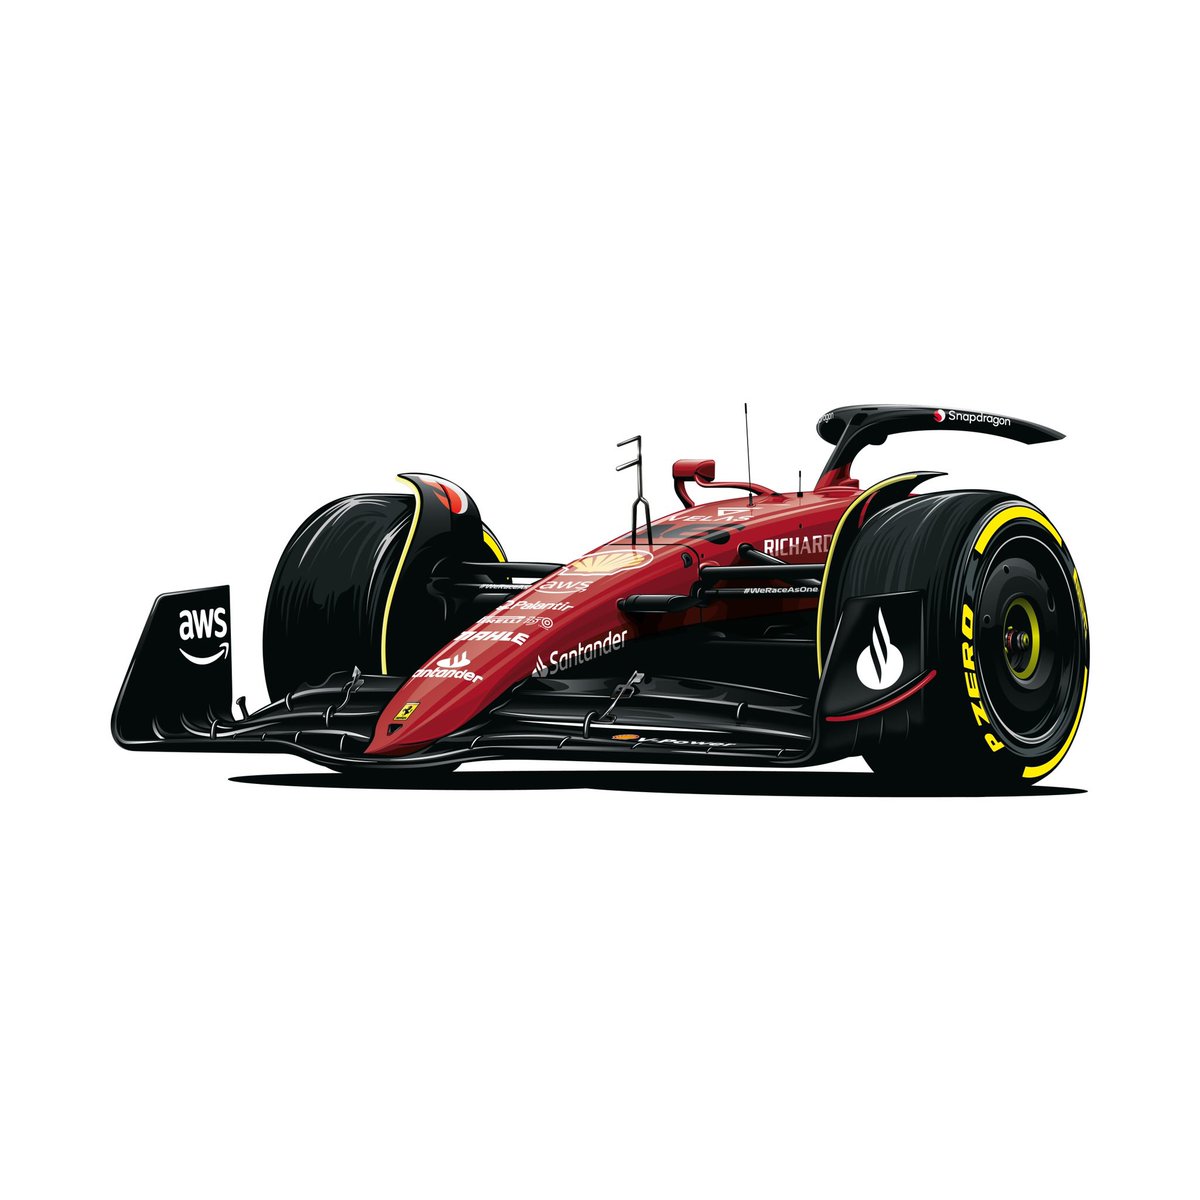 Building an #F1 car. The red and black combination looks fantastic 😍🔴⚫️ #Ferrari #Formula1 #FerrariArt #essereFerrari #WIP #workinprogress #VectorArt #F1Art #F175